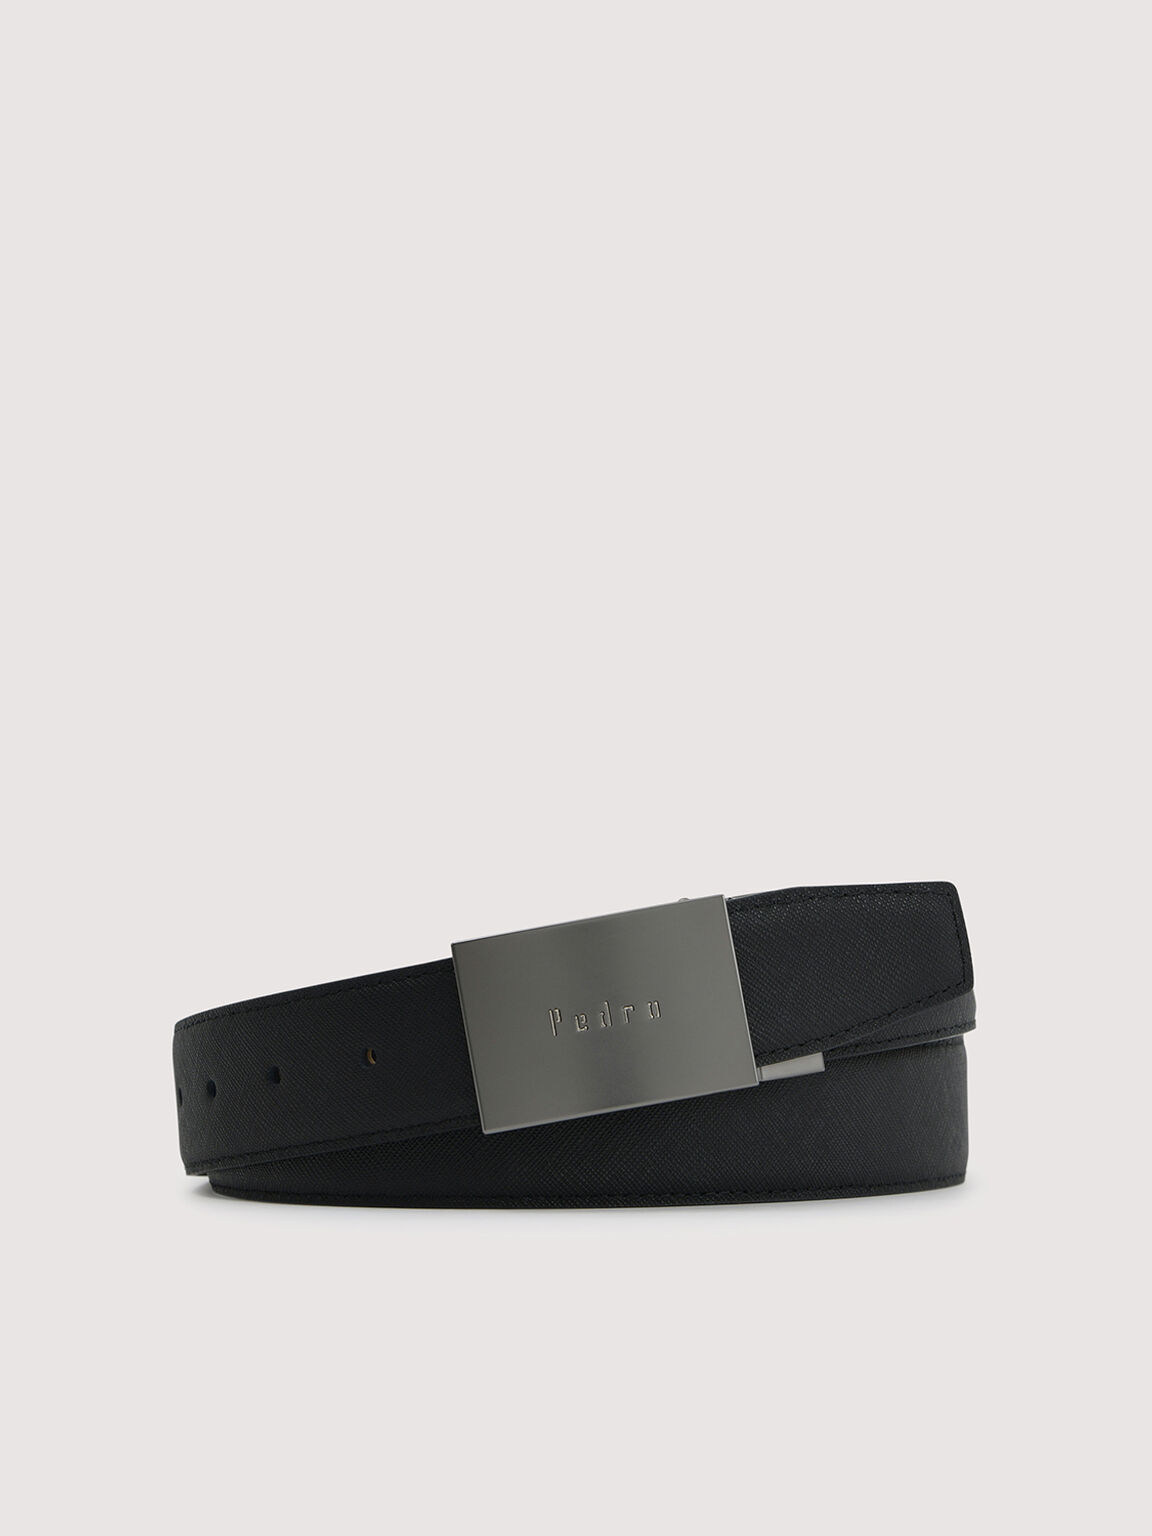 Reversible Tang Leather Belt, Black